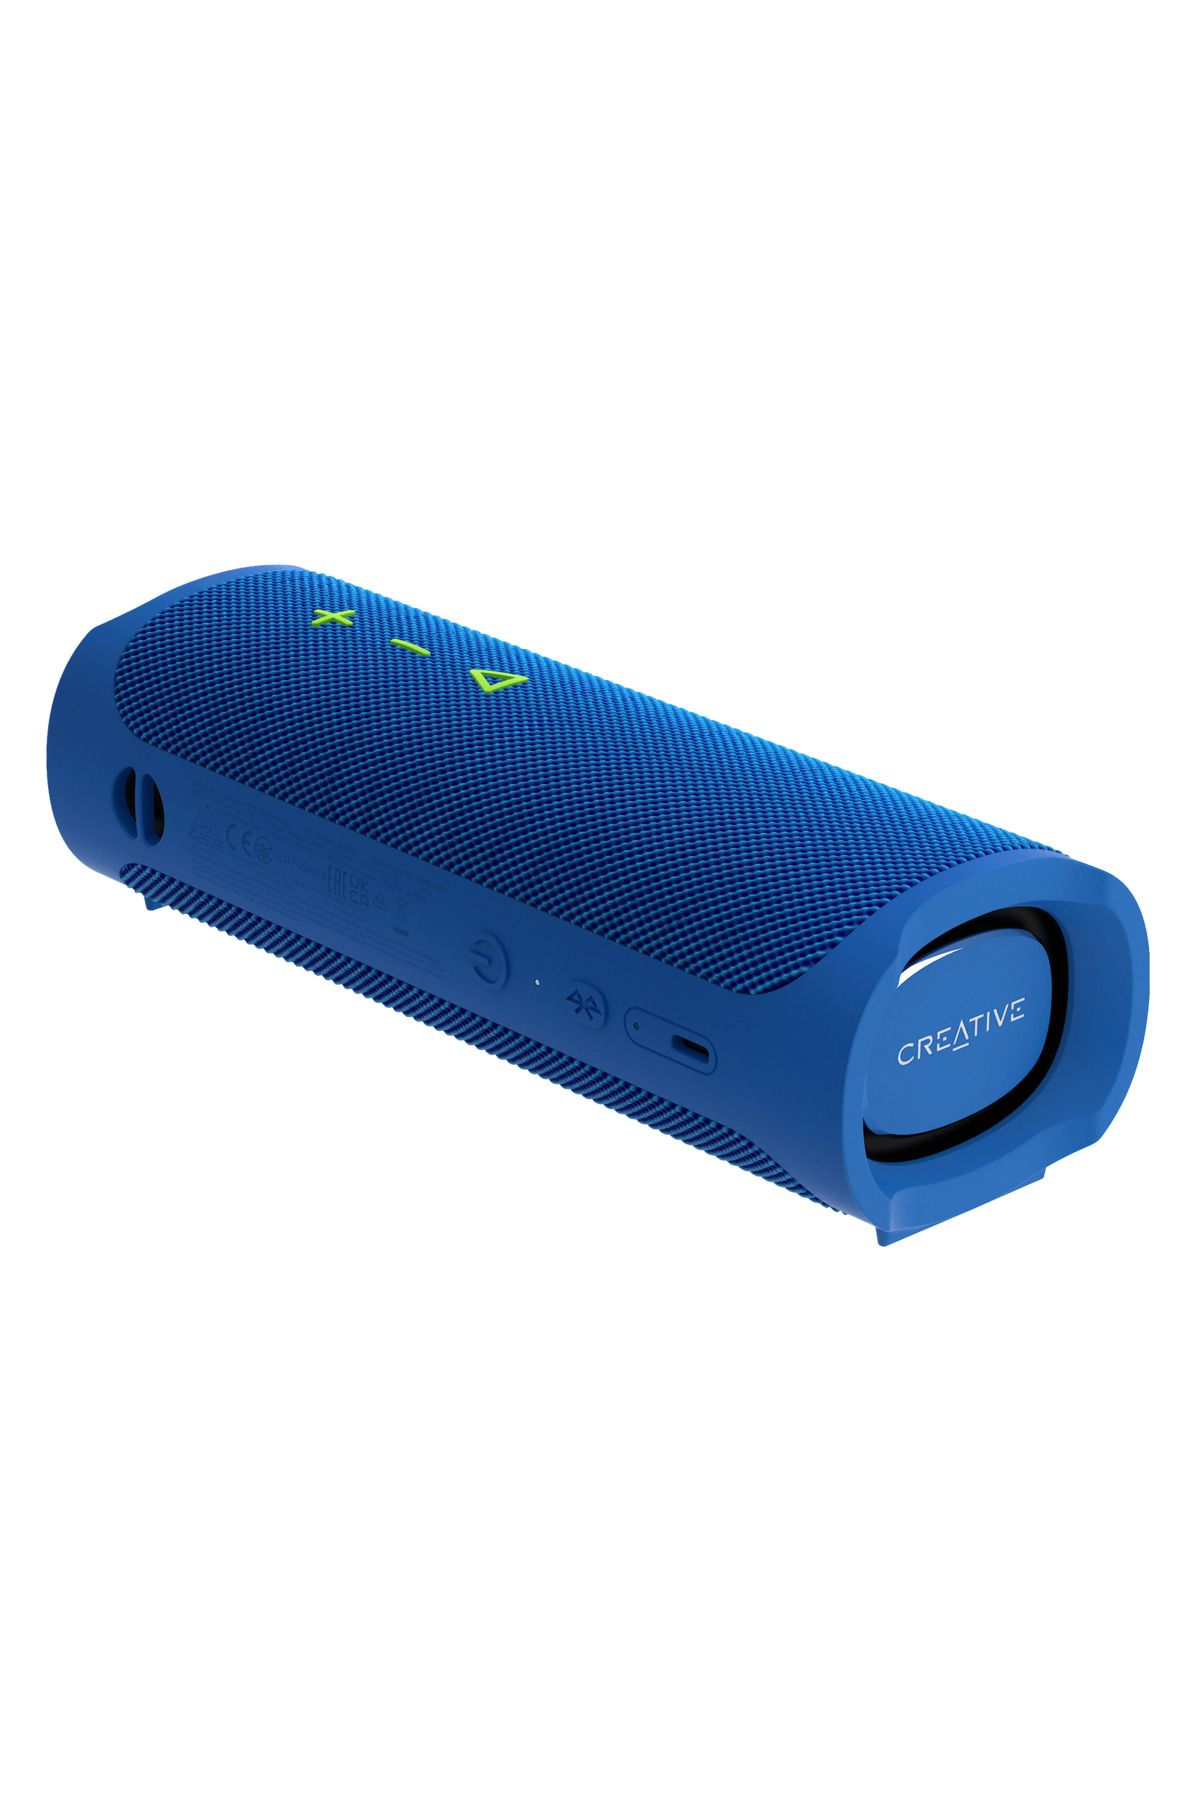 Creative Muvo GO - Bluetooth 5.3 - 18 Saate Kadar Pil Ömrü - IPX7 Su Geçirmez  - 40W - Mavi